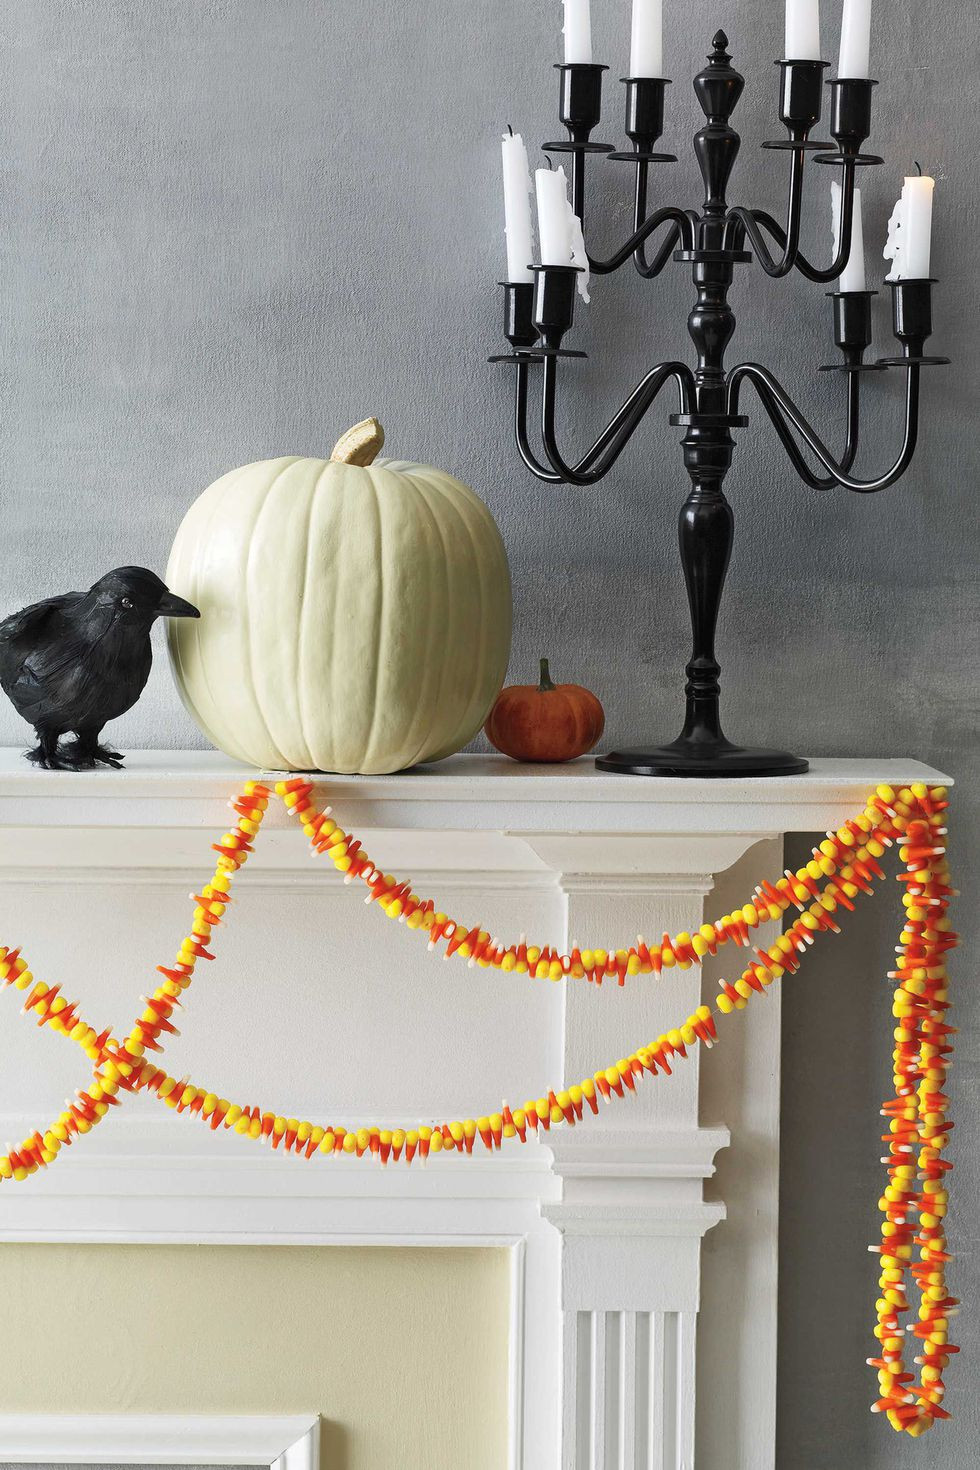 DIY Halloween Decoration Ideas
 15 Adorable DIY Halloween Decor Ideas To Add To Your